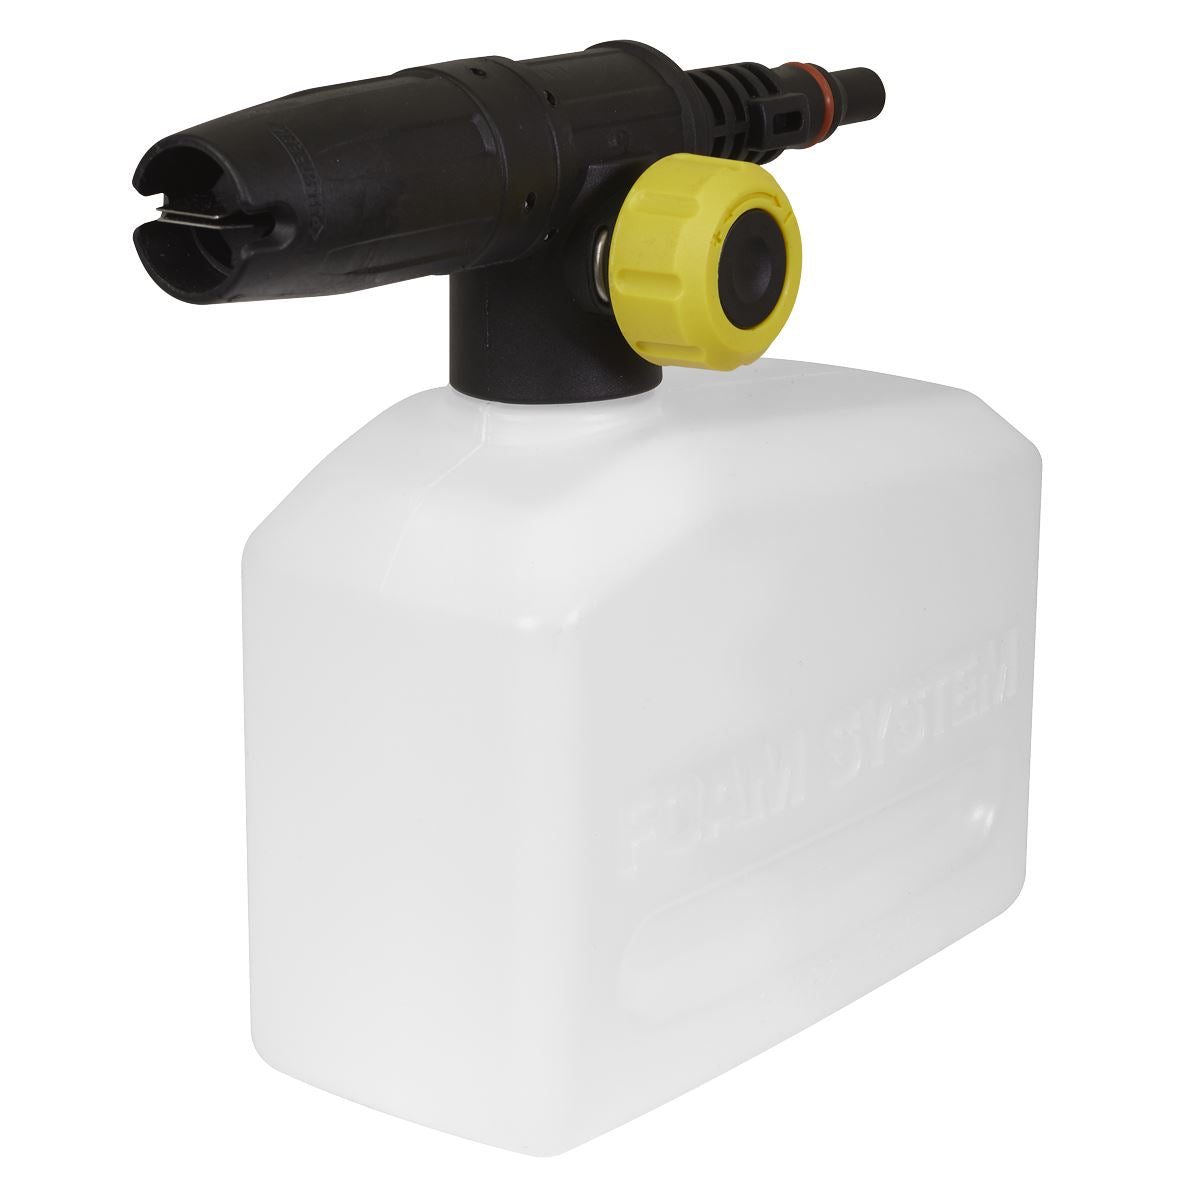 Sealey Pressure Washer 130bar with Snow Foam Sprayer Kit